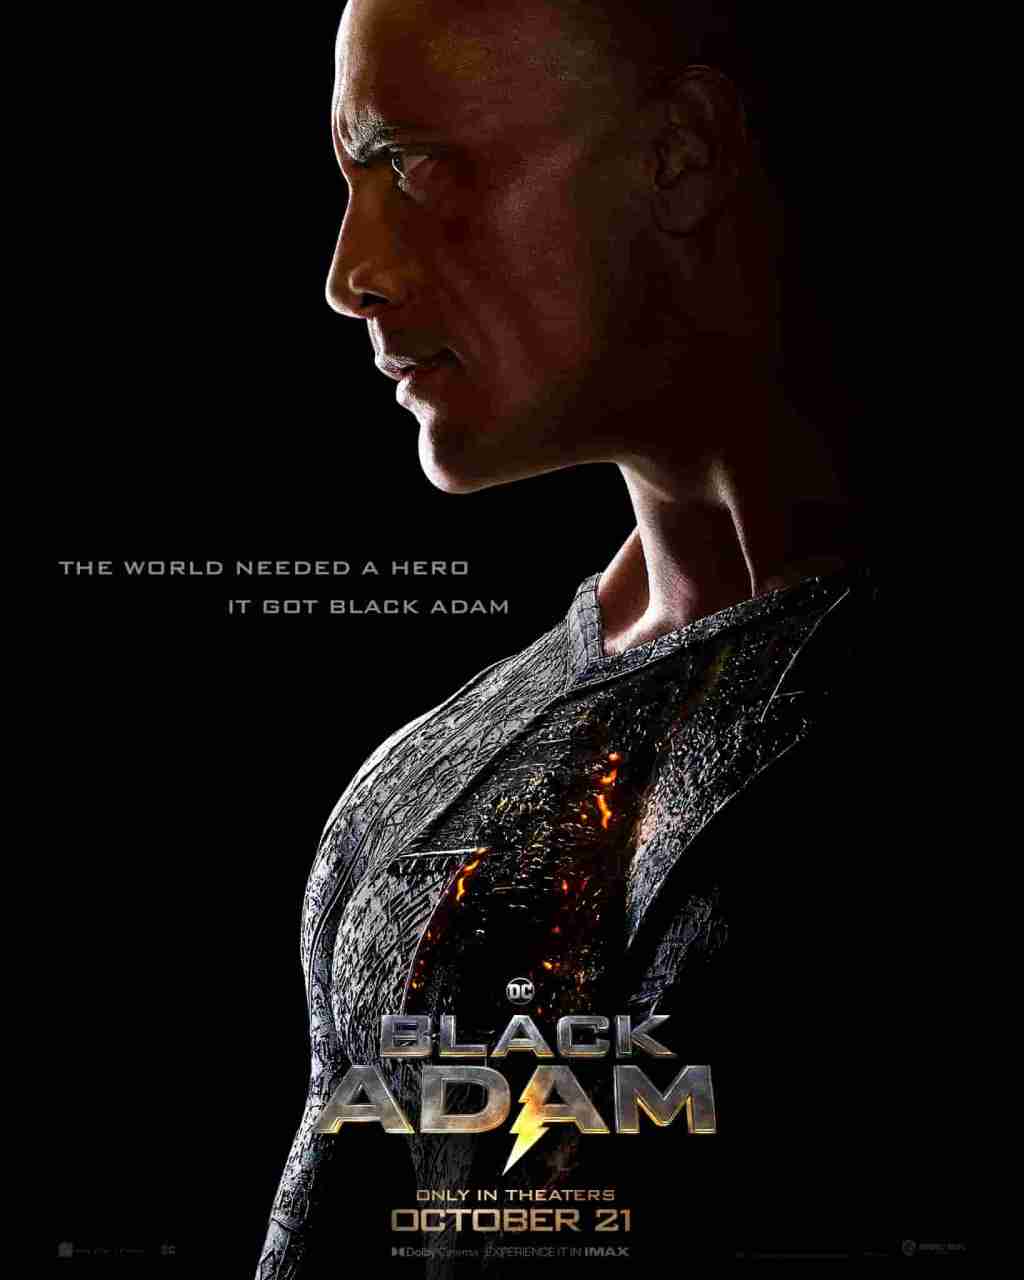 Black Adam Official Trailer Starring Dwayne Johnson and Pierce Brosnan